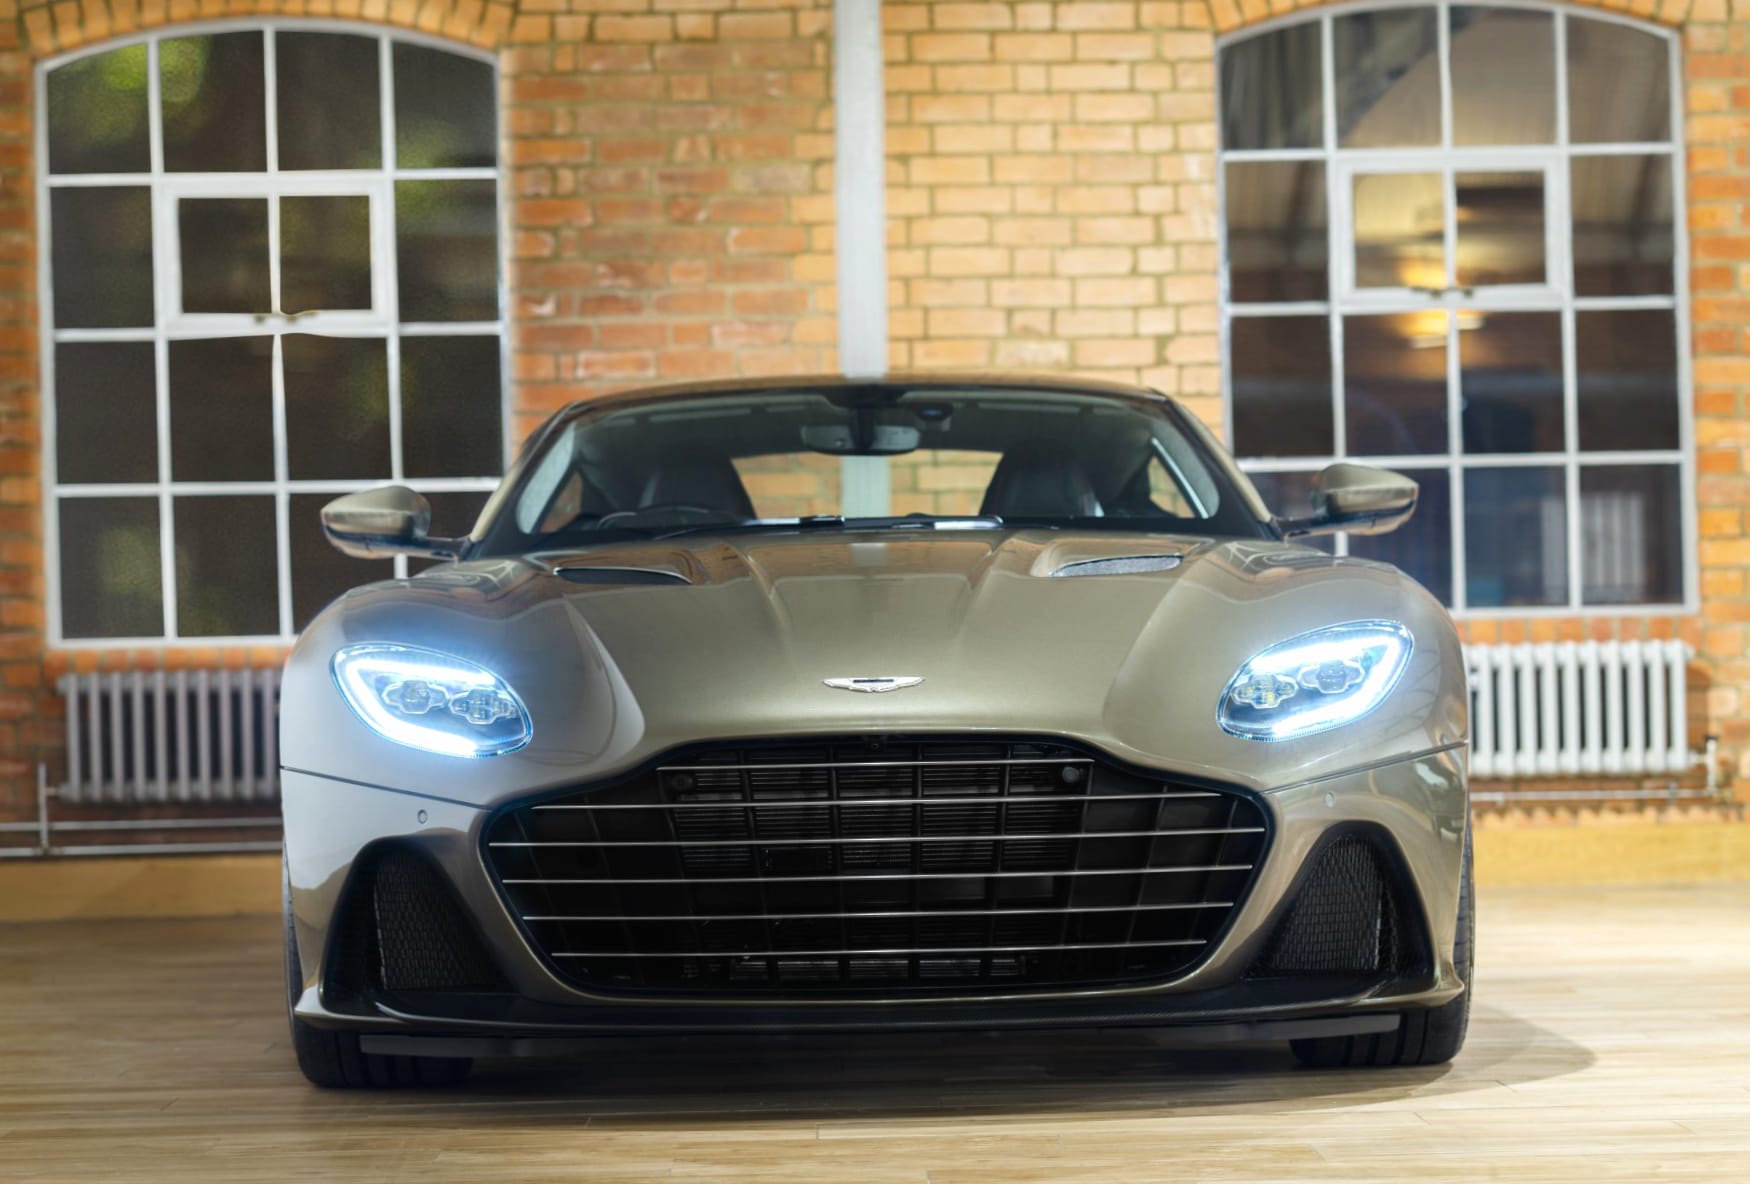 Aston Martin DBS Superleggera at 750 x 1334 iPhone 6 size wallpapers HD quality